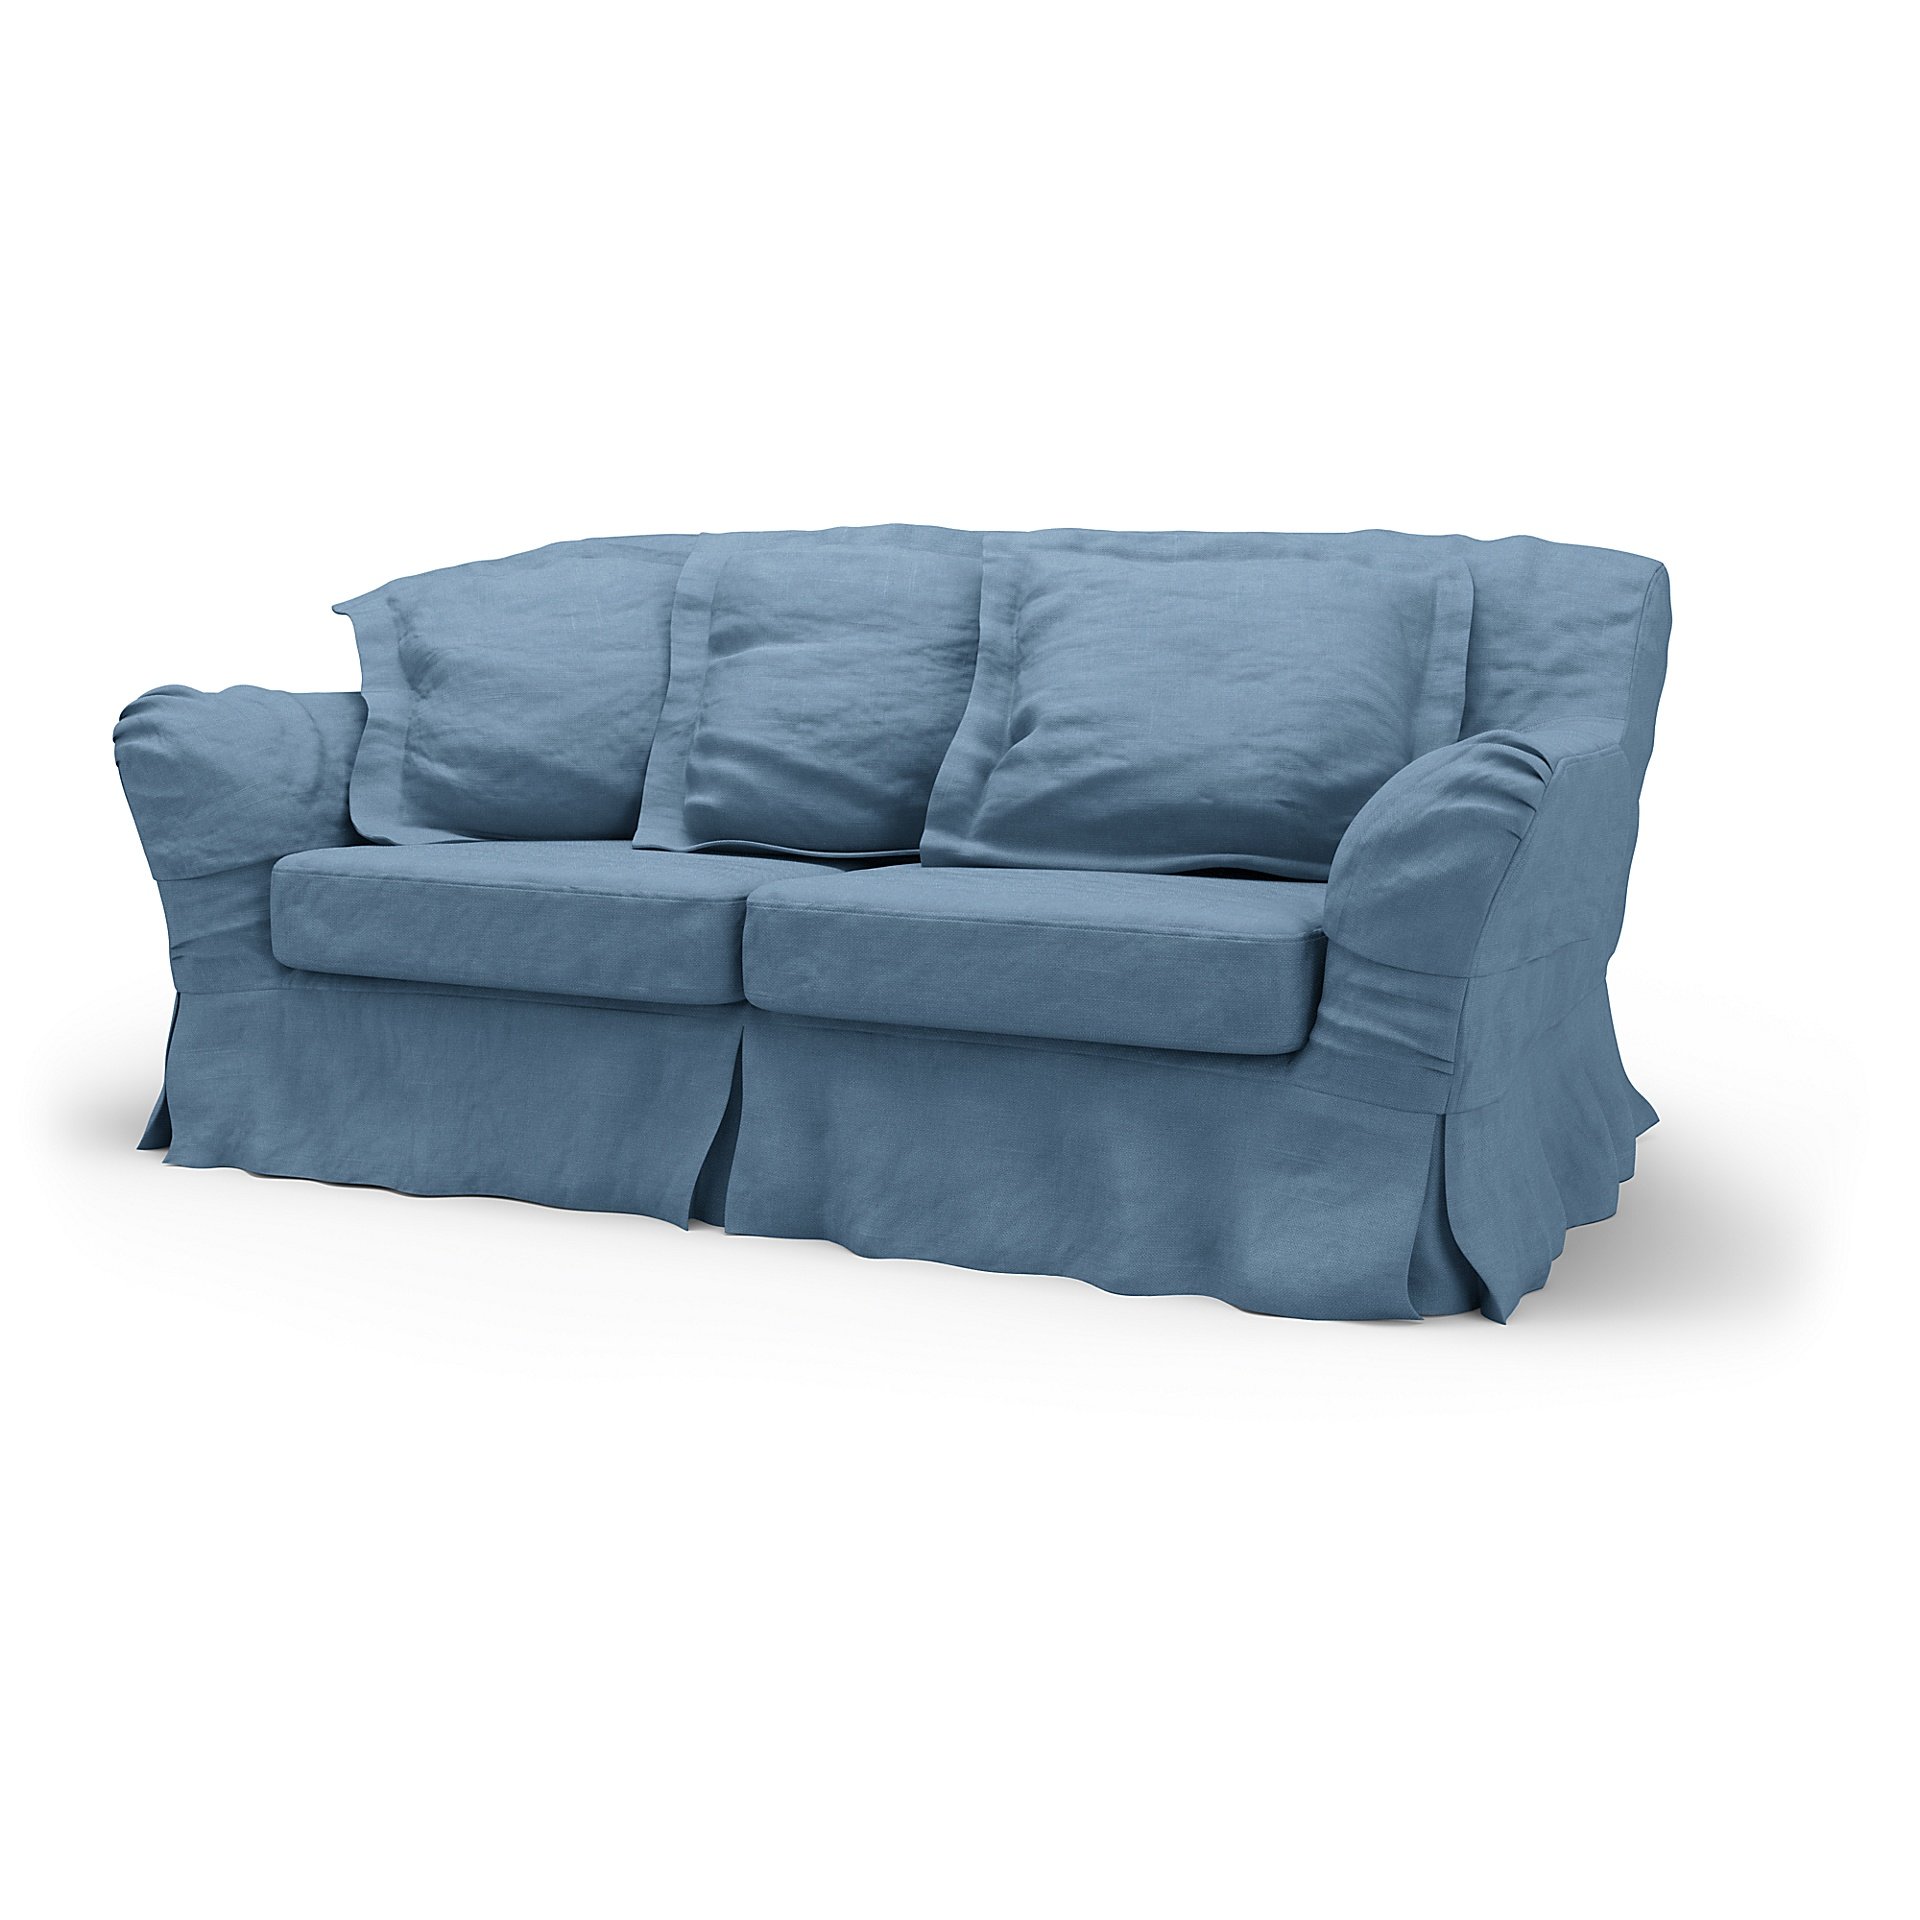 IKEA - Tomelilla 2 Seater Sofa Cover, Vintage Blue, Linen - Bemz